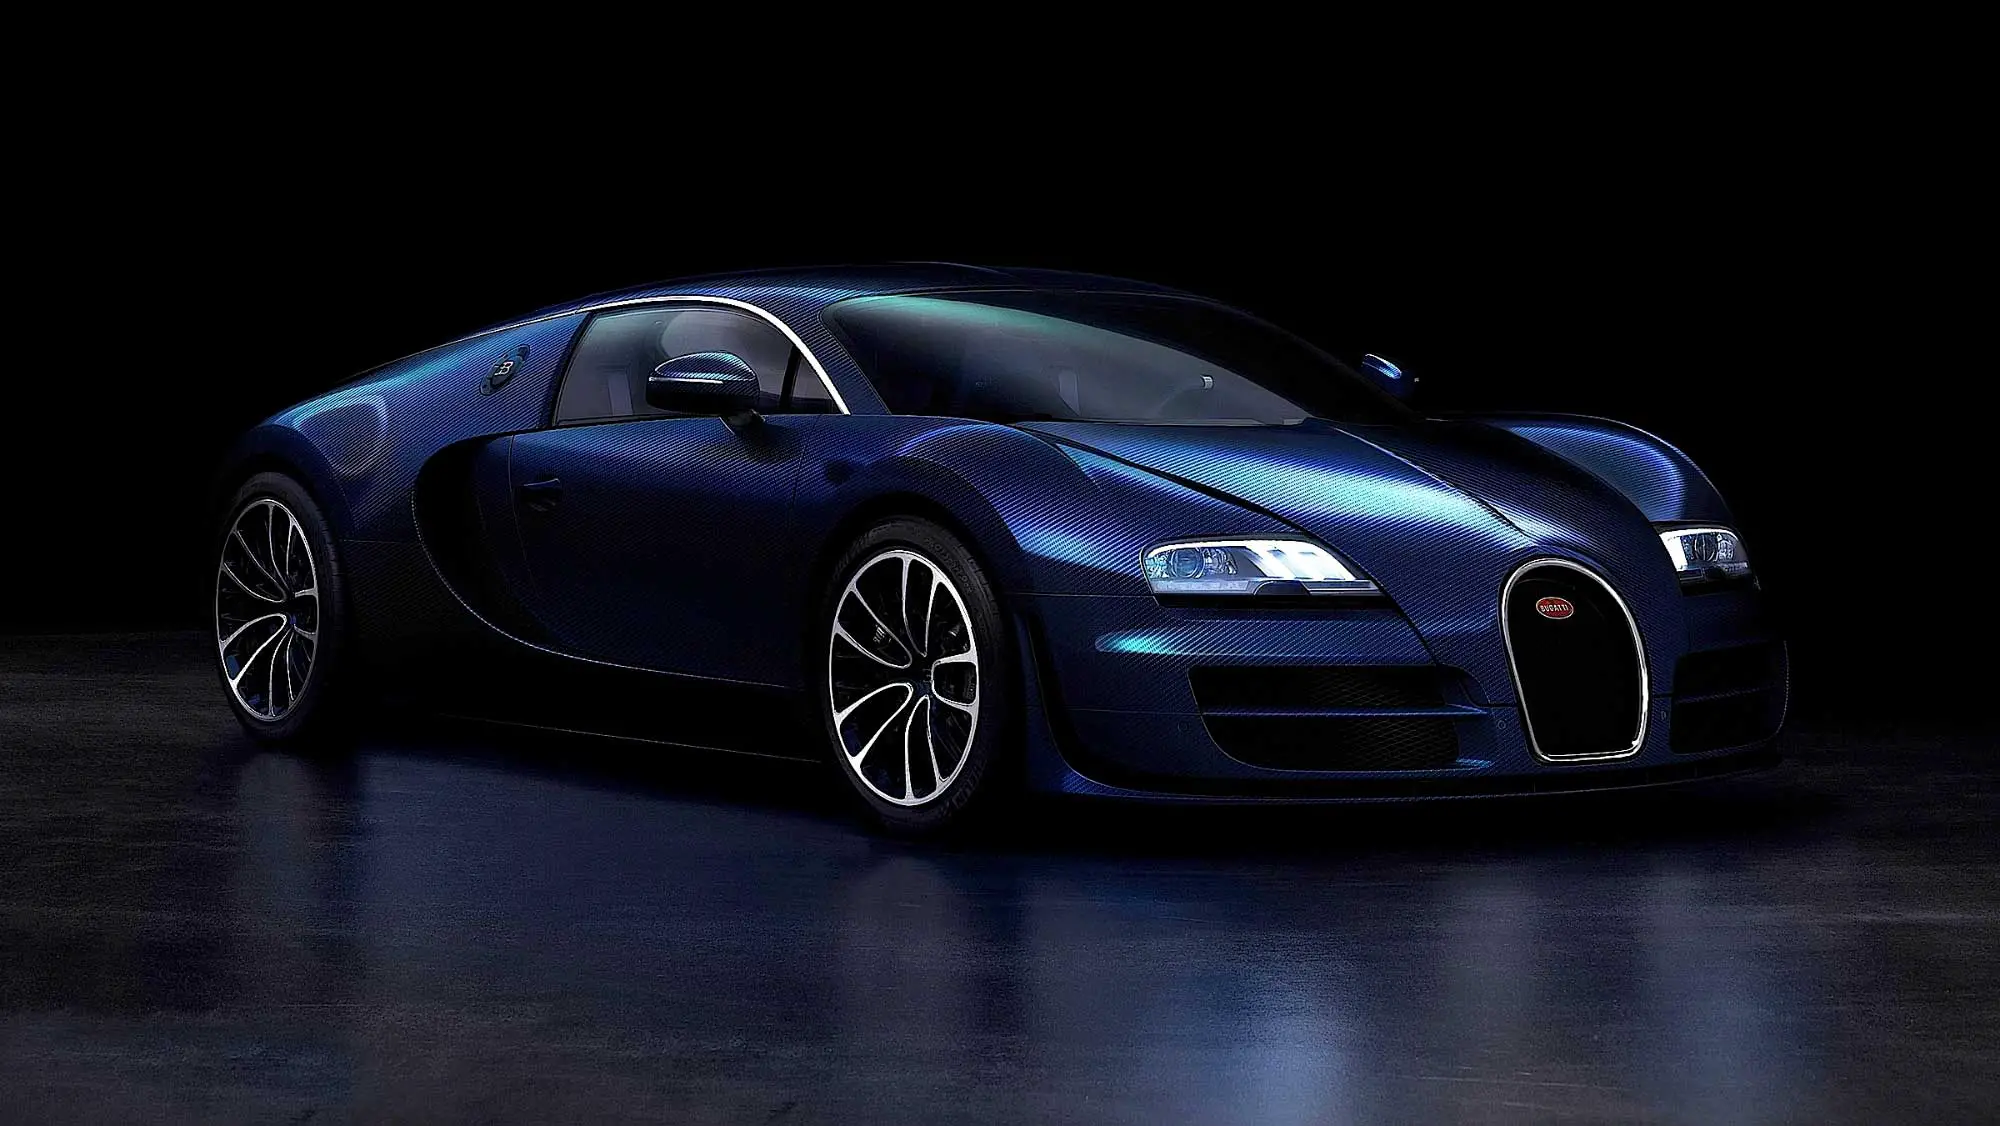 Bugatti Veyron 16 4 Super Sport Exterior Image Gallery